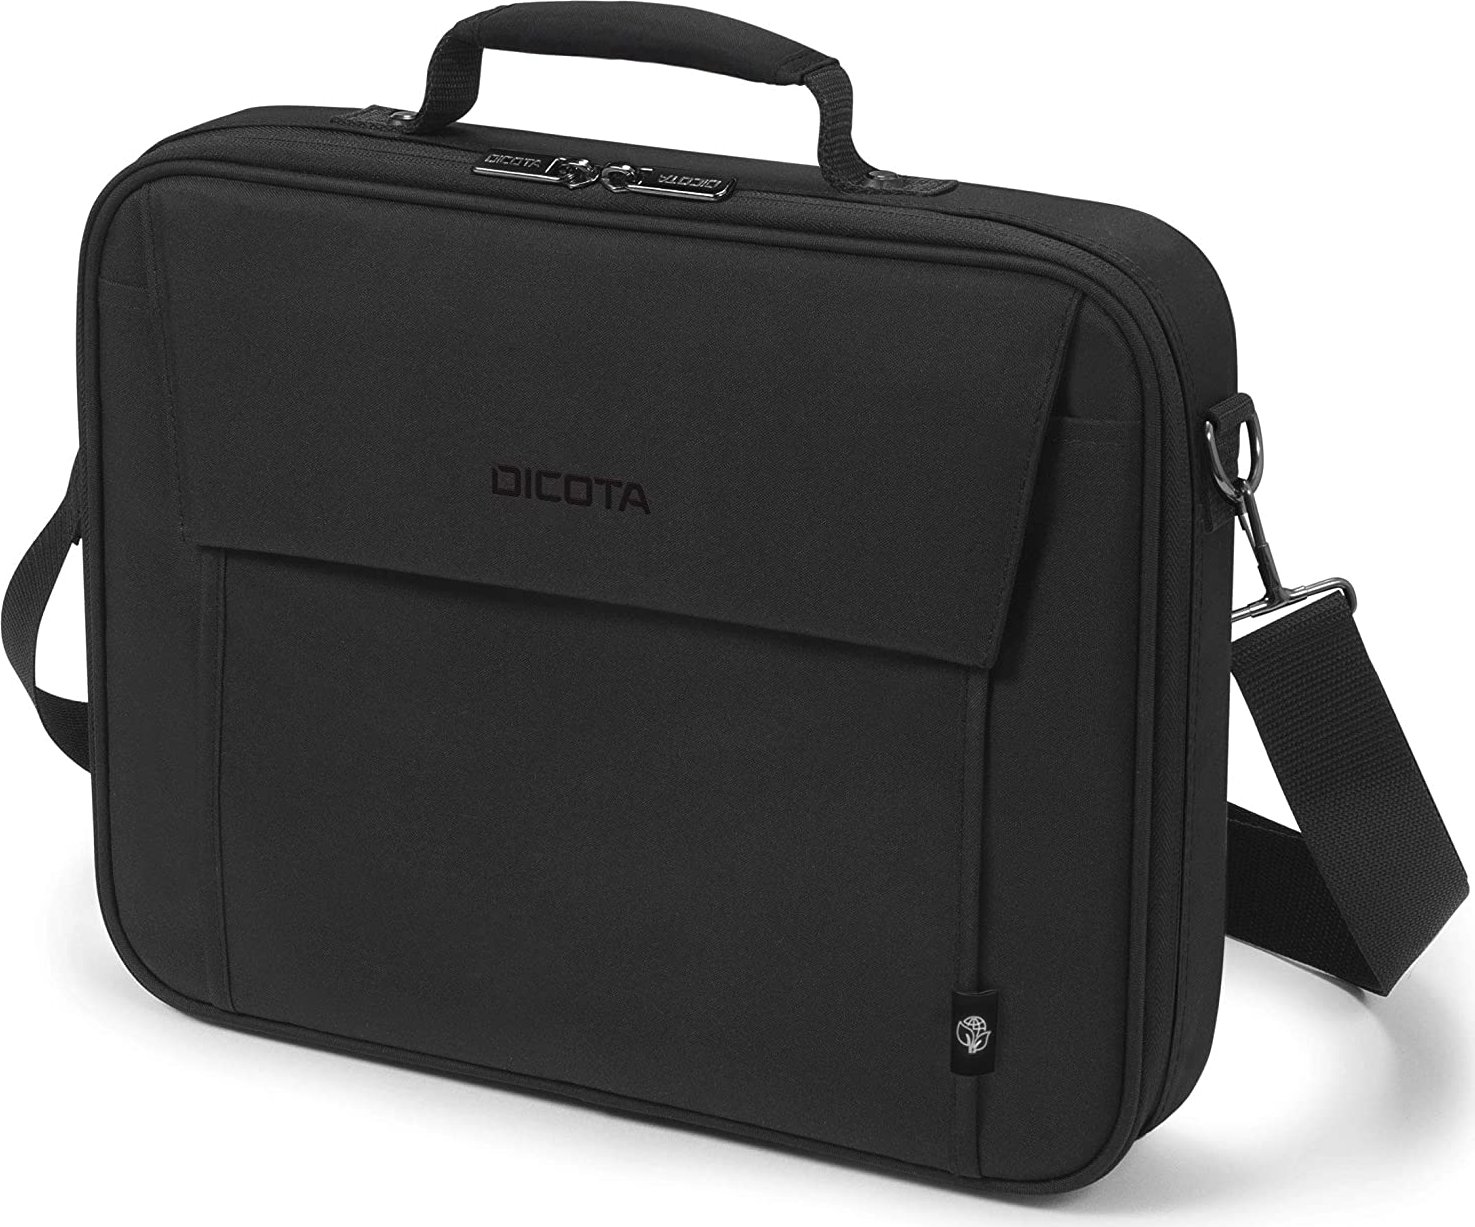 15-17.3" Dicota Eco Multi Base Notebooktasche, schwarz